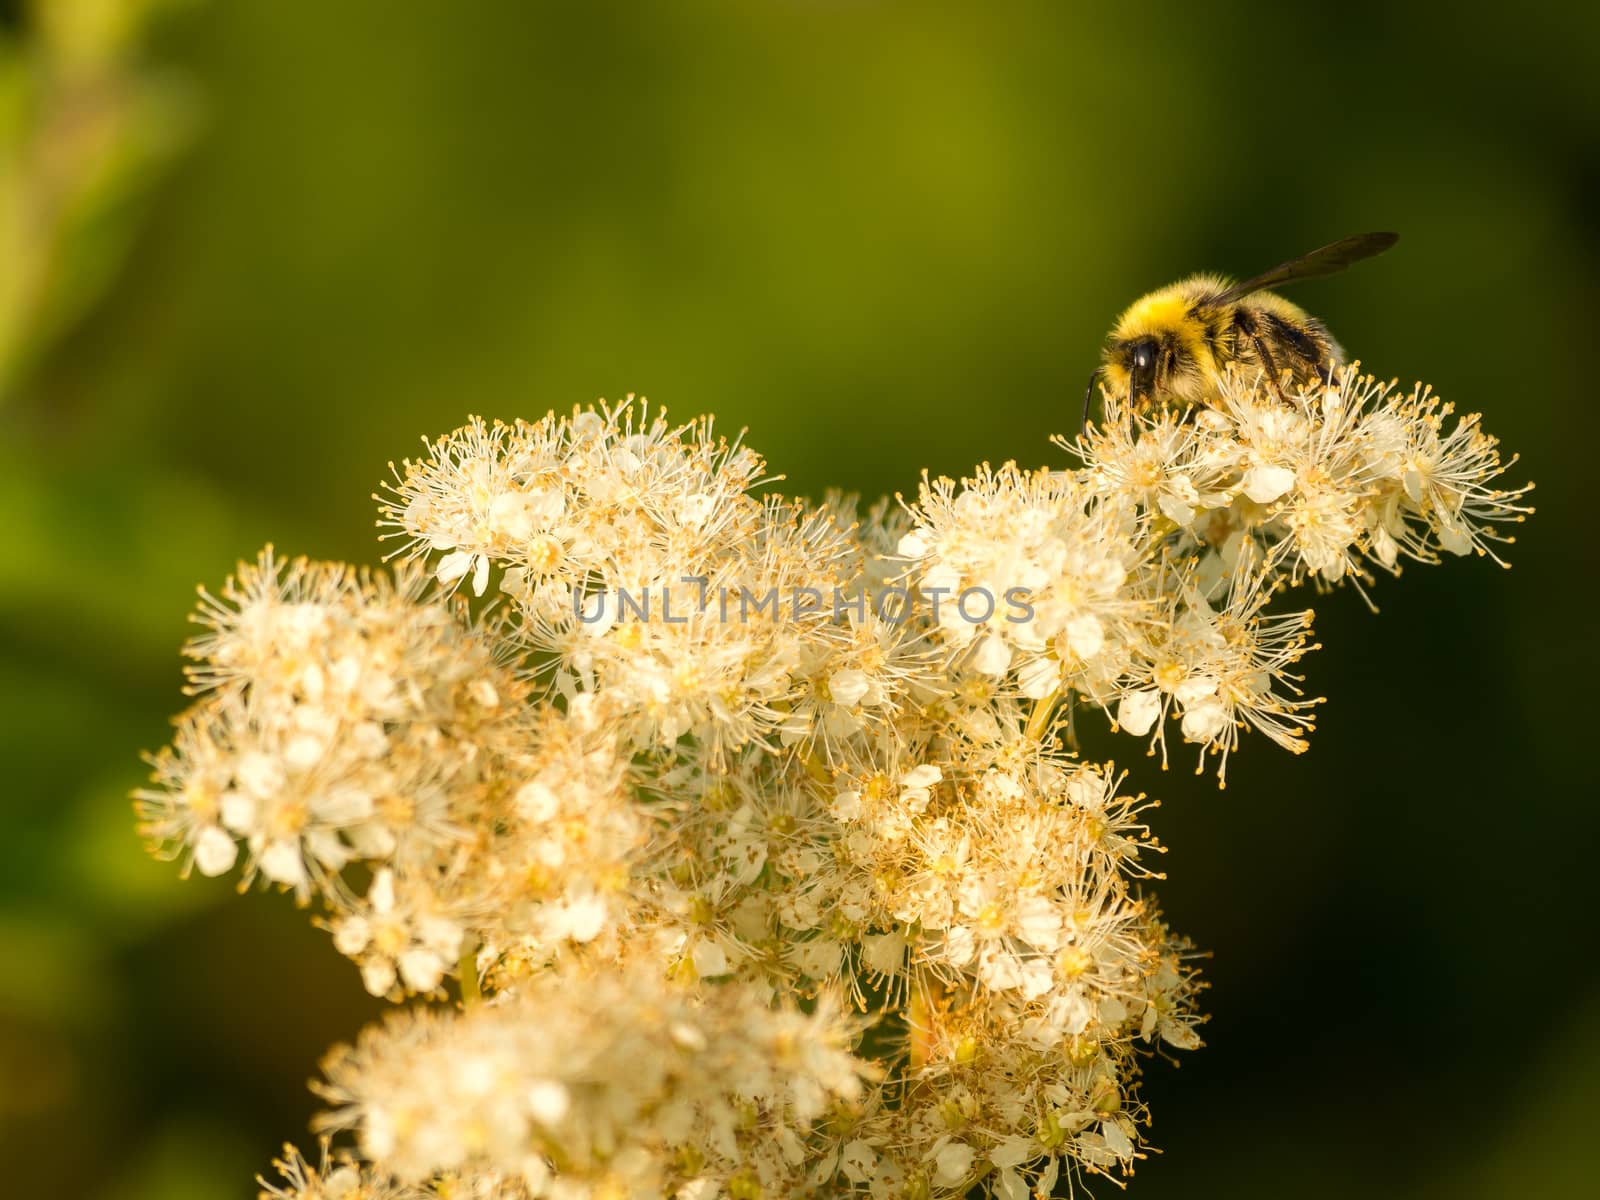 Wasp on a powdery flower by frankhoekzema